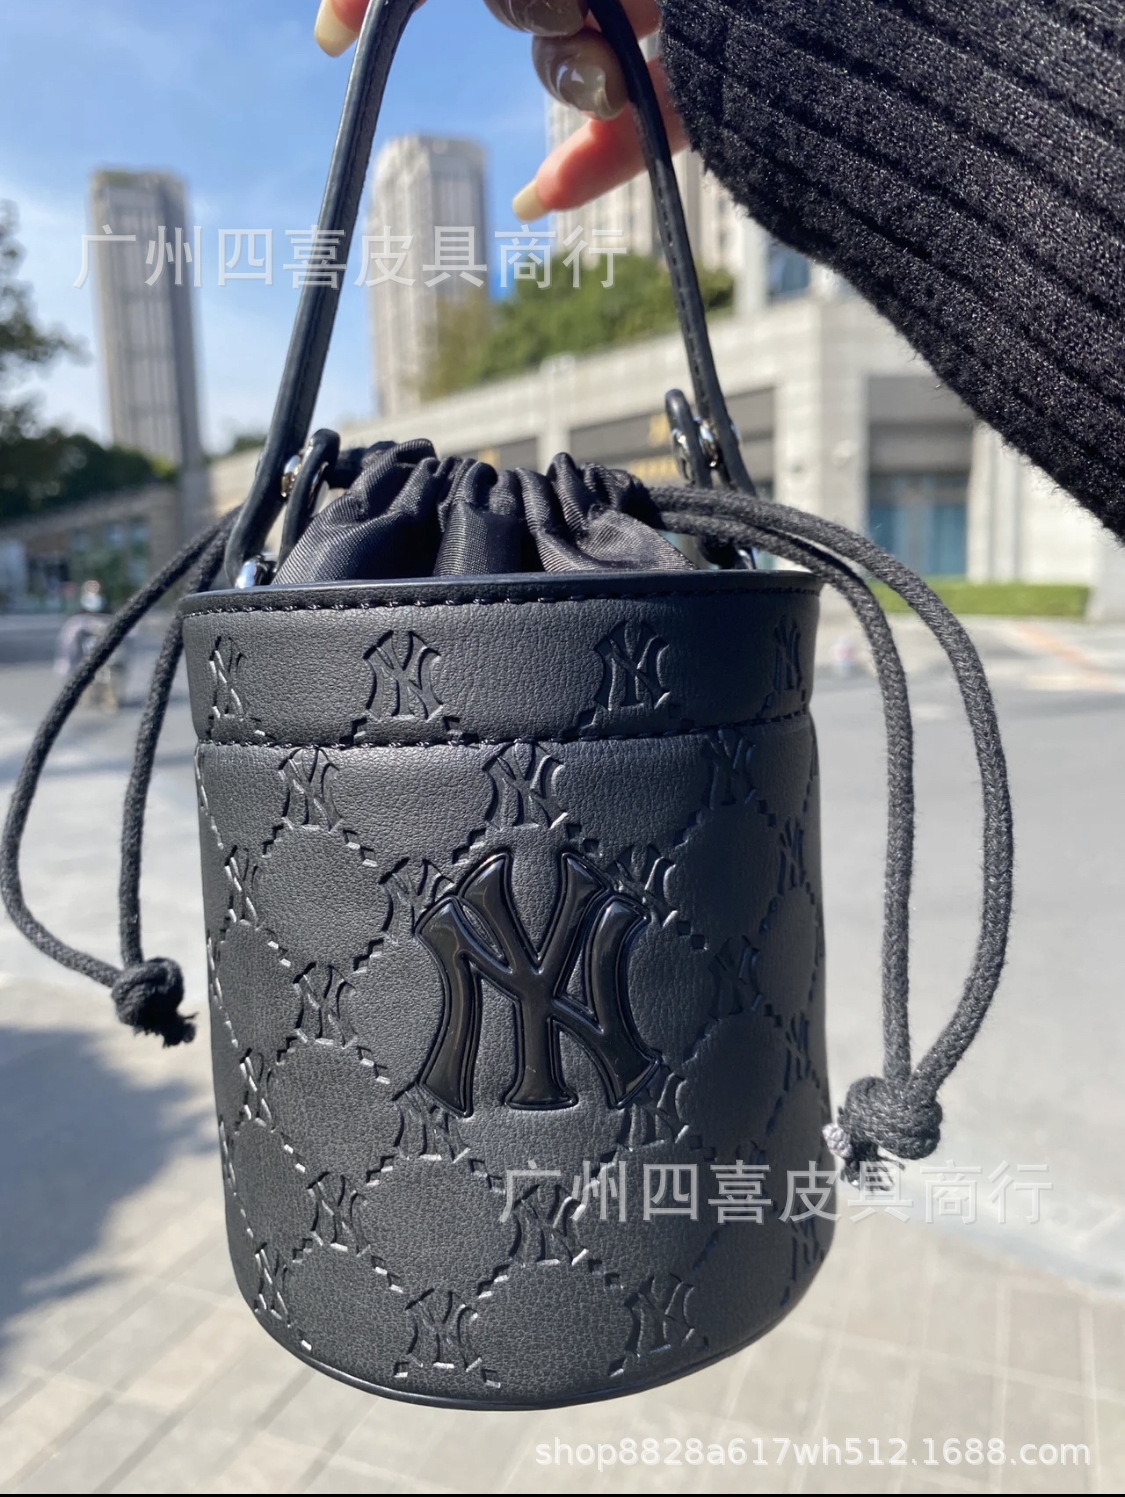 MLB Bucket Bag Black Original Korea (Tas Buket)